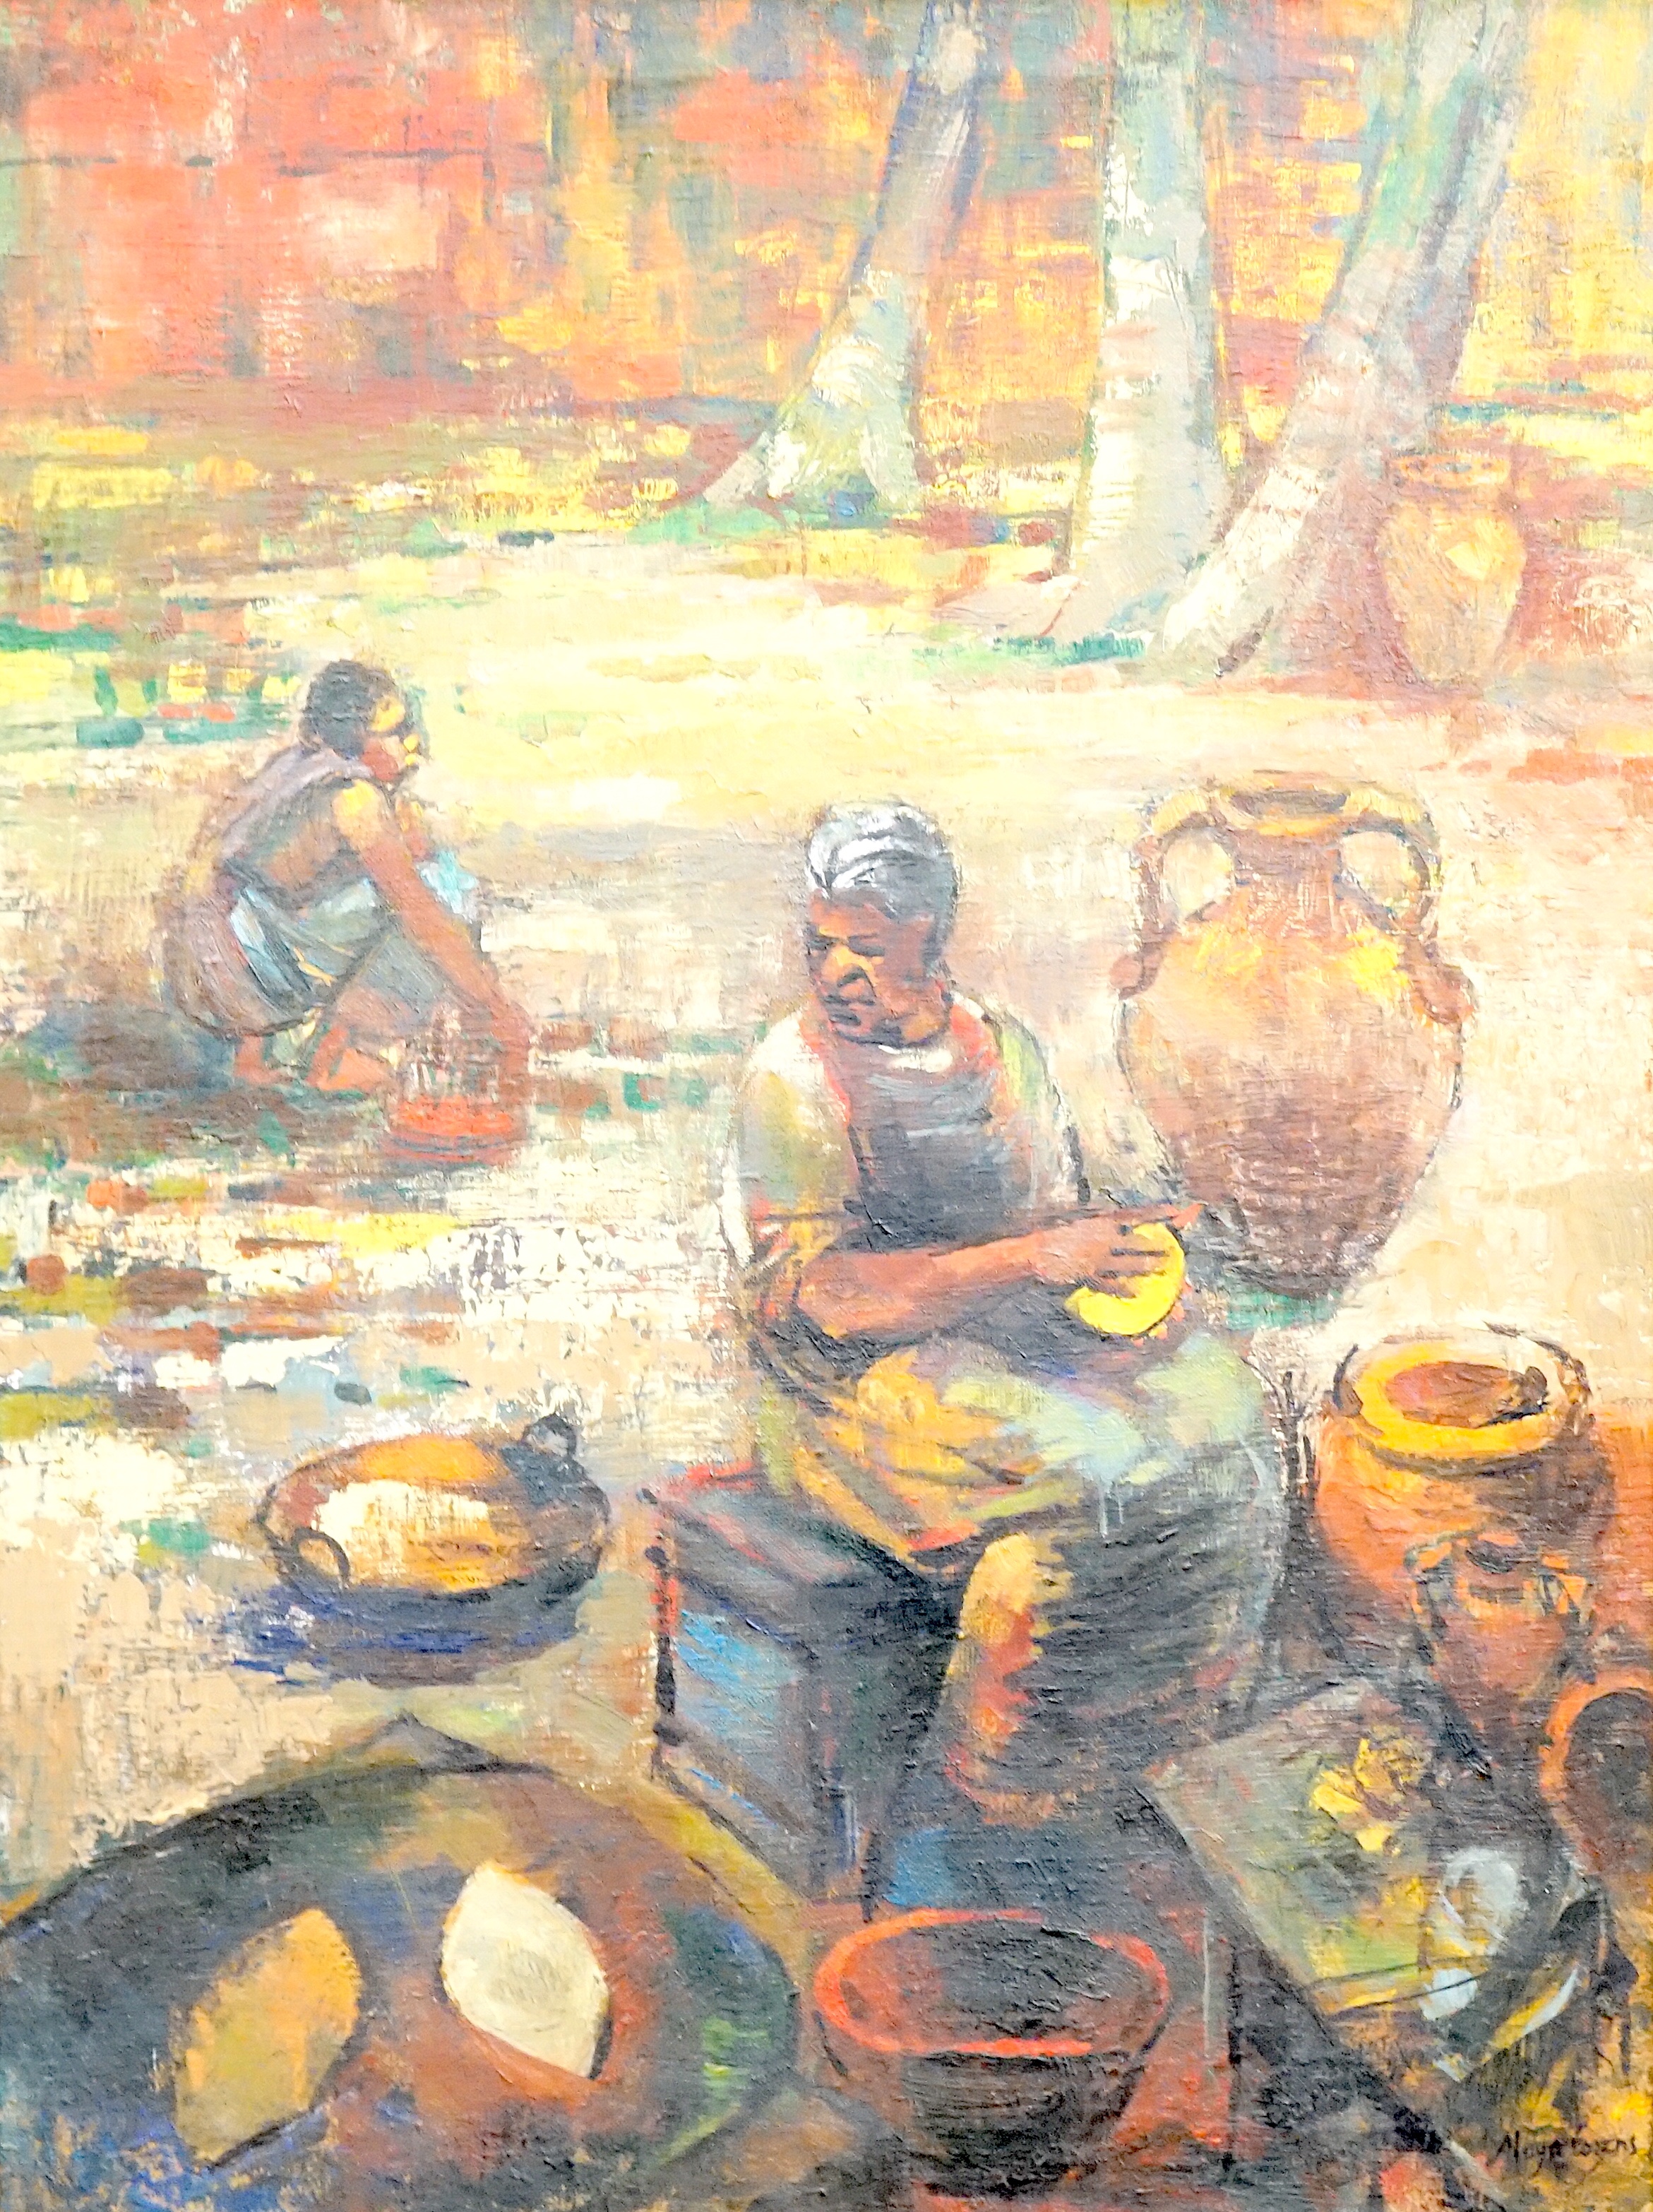 Moya Cozens (1920-1990), 'Jamaican Tortilla Maker', oil on canvas, 60 x 45cm